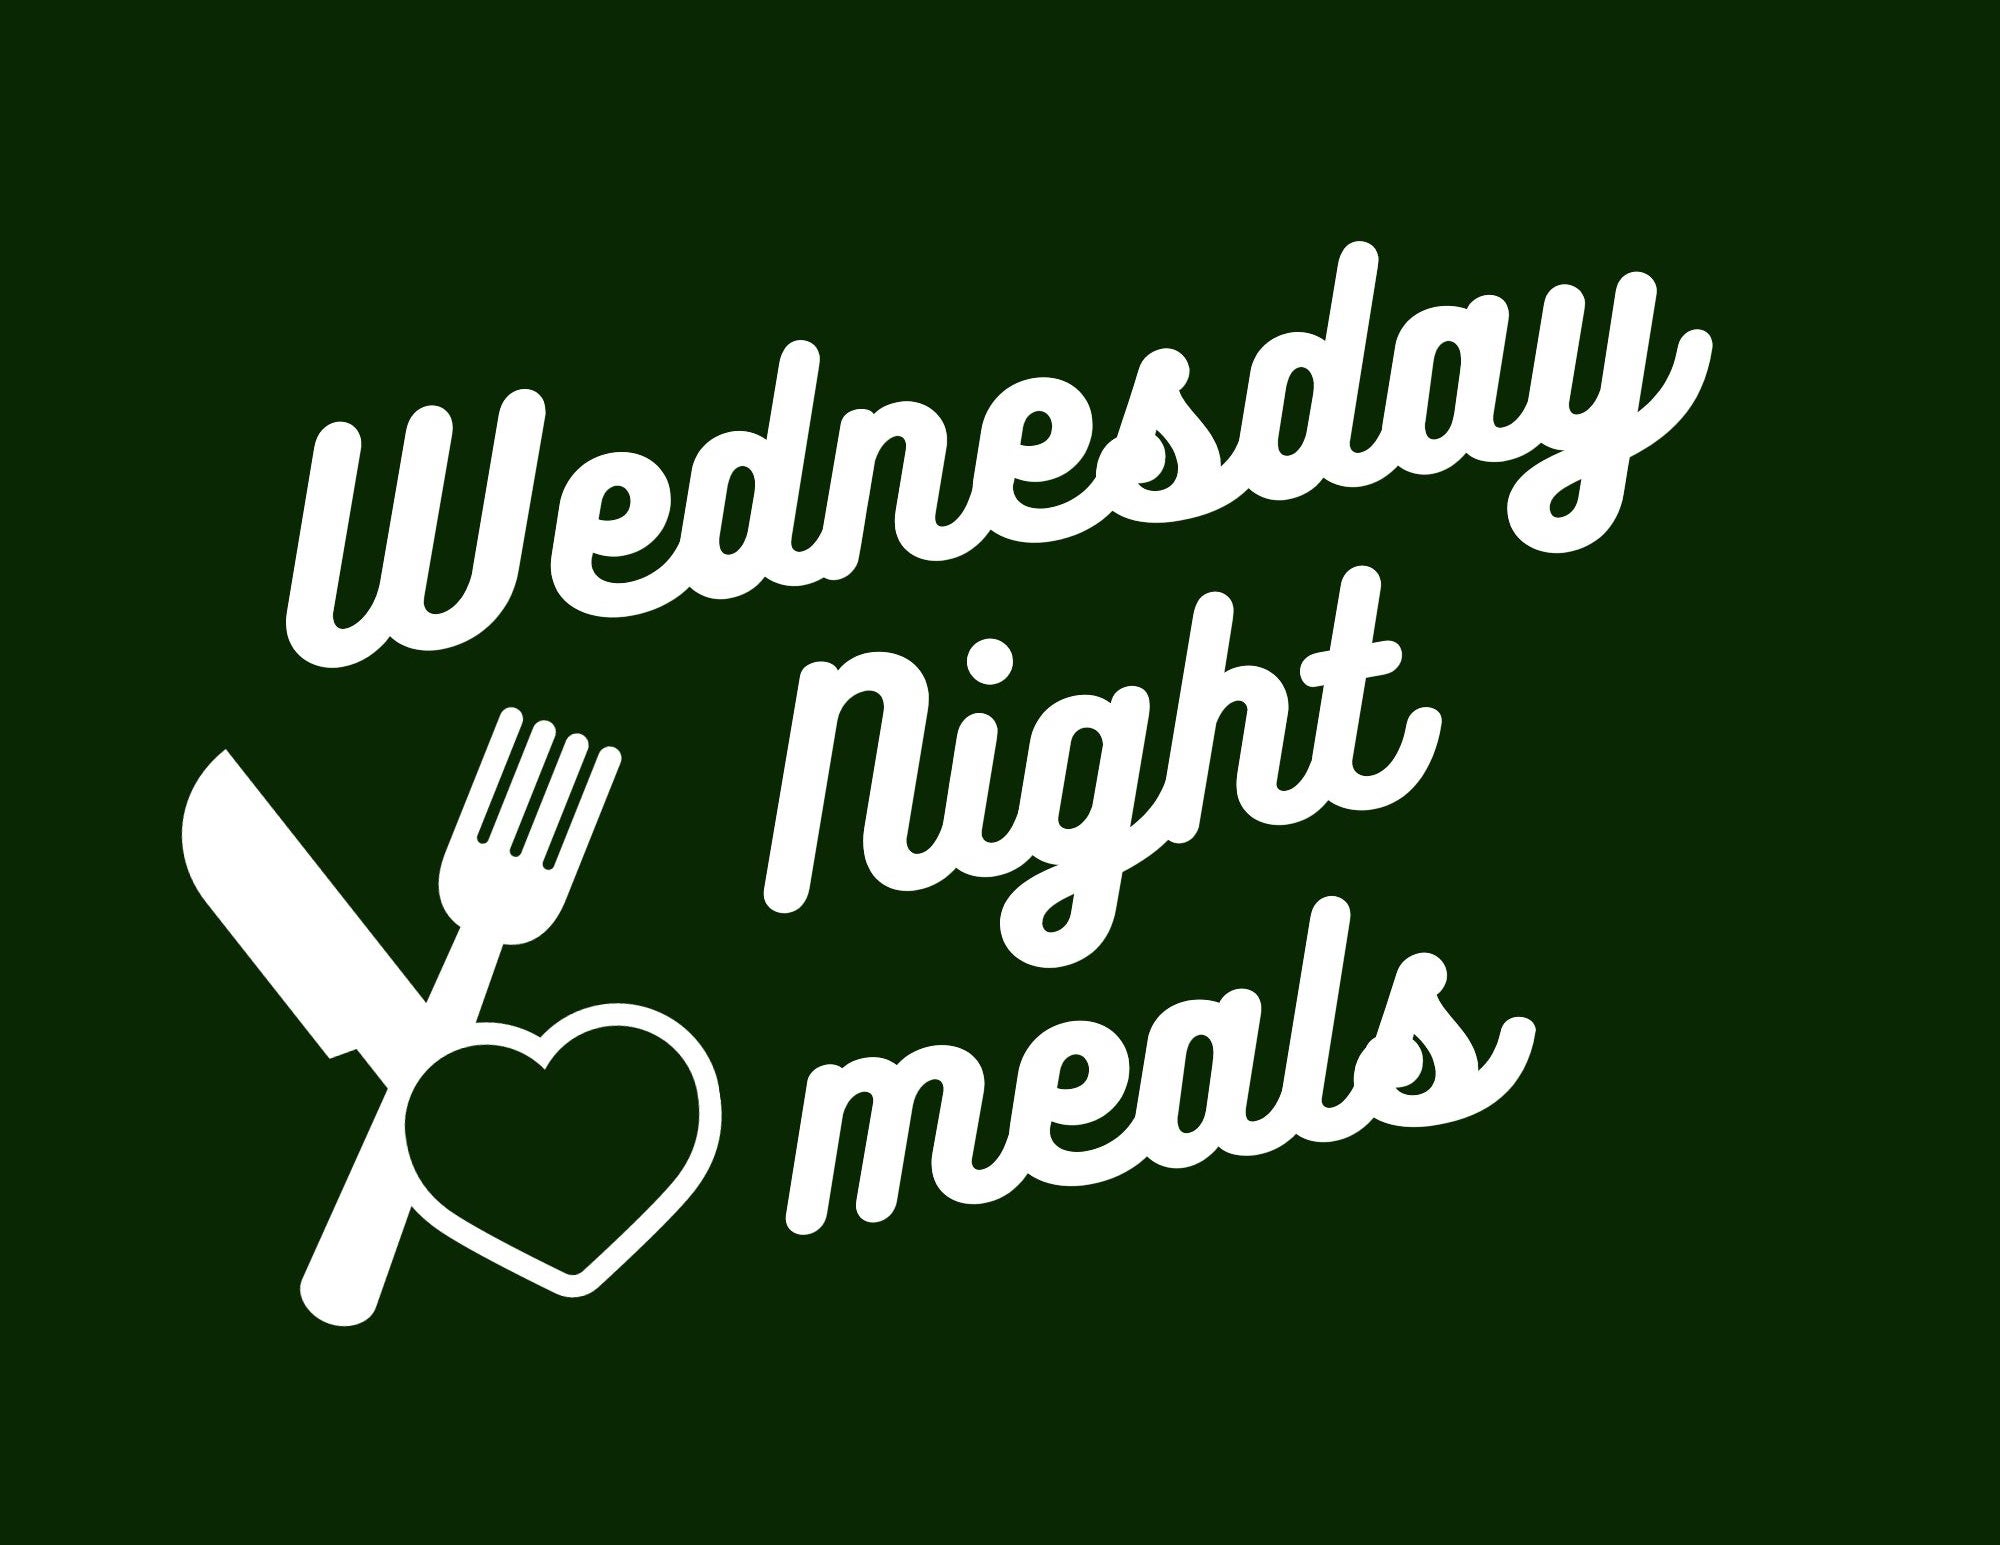 Wednesday Night Meals logo